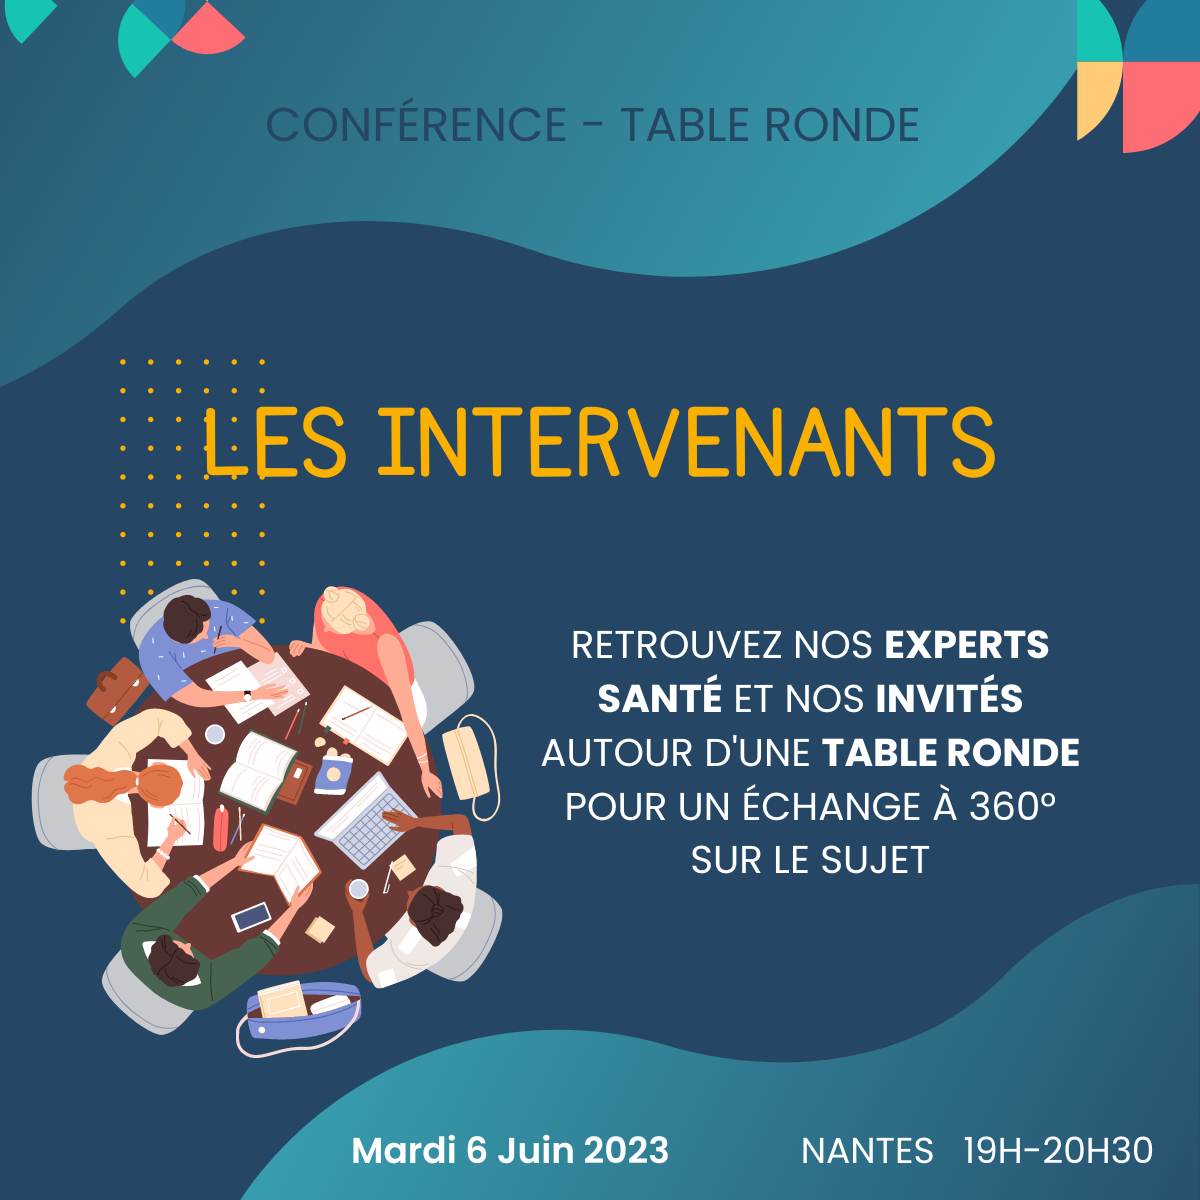 PREVIA-Visuel Conference Nantes Juin 2023 - Intervenants